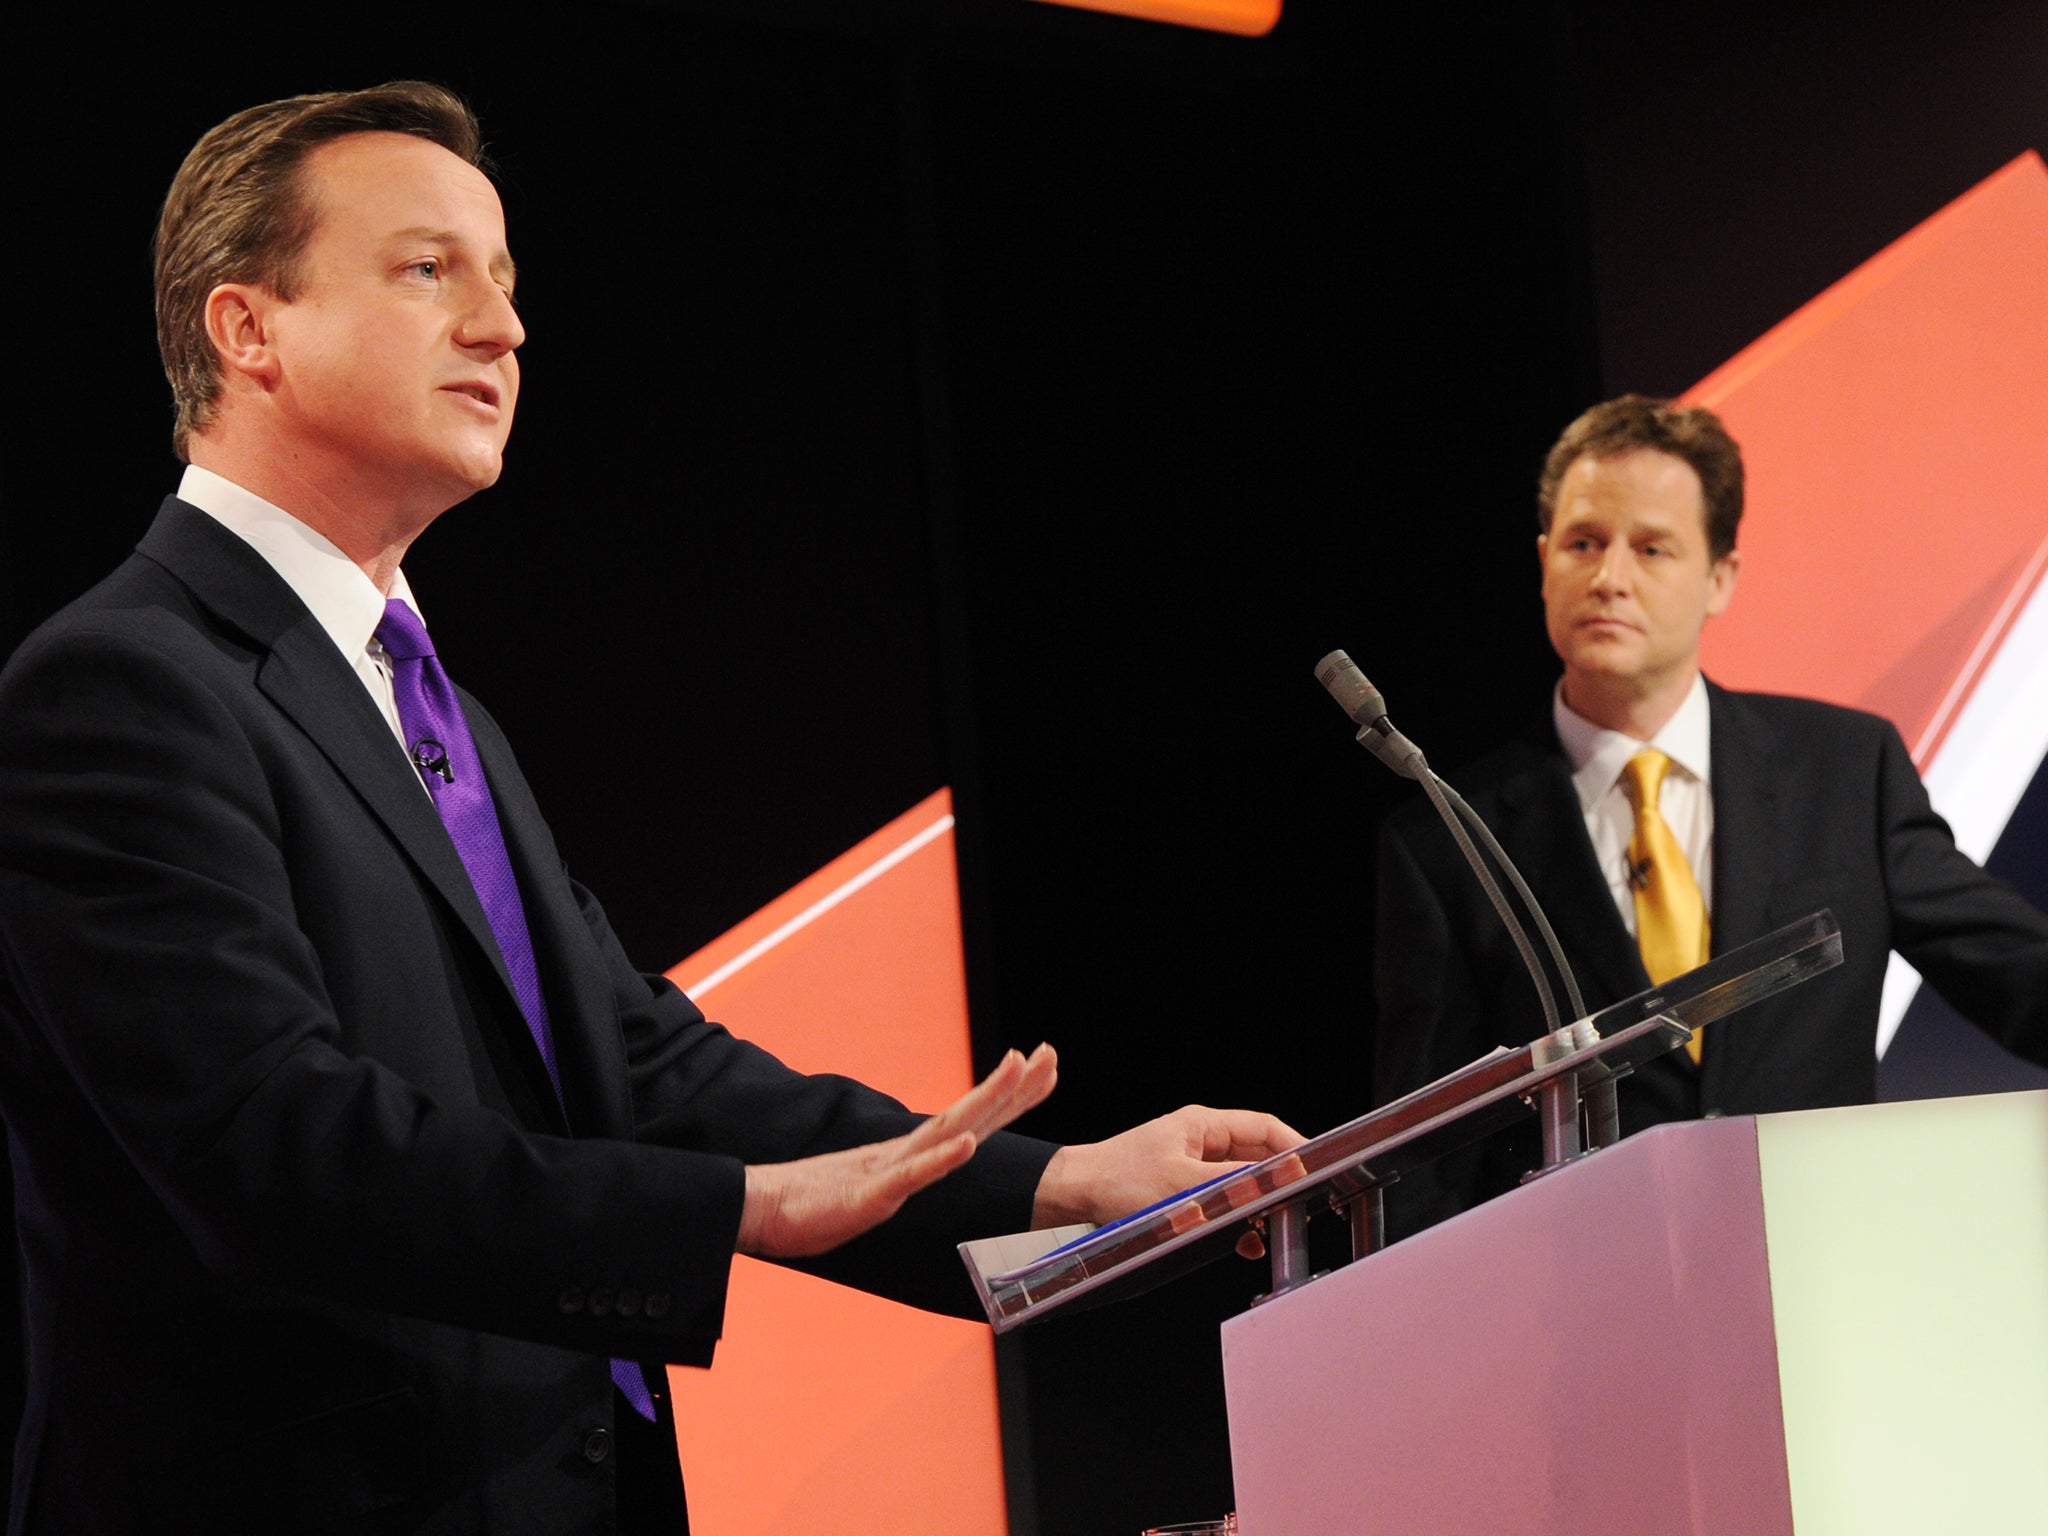 The 2010 television debates